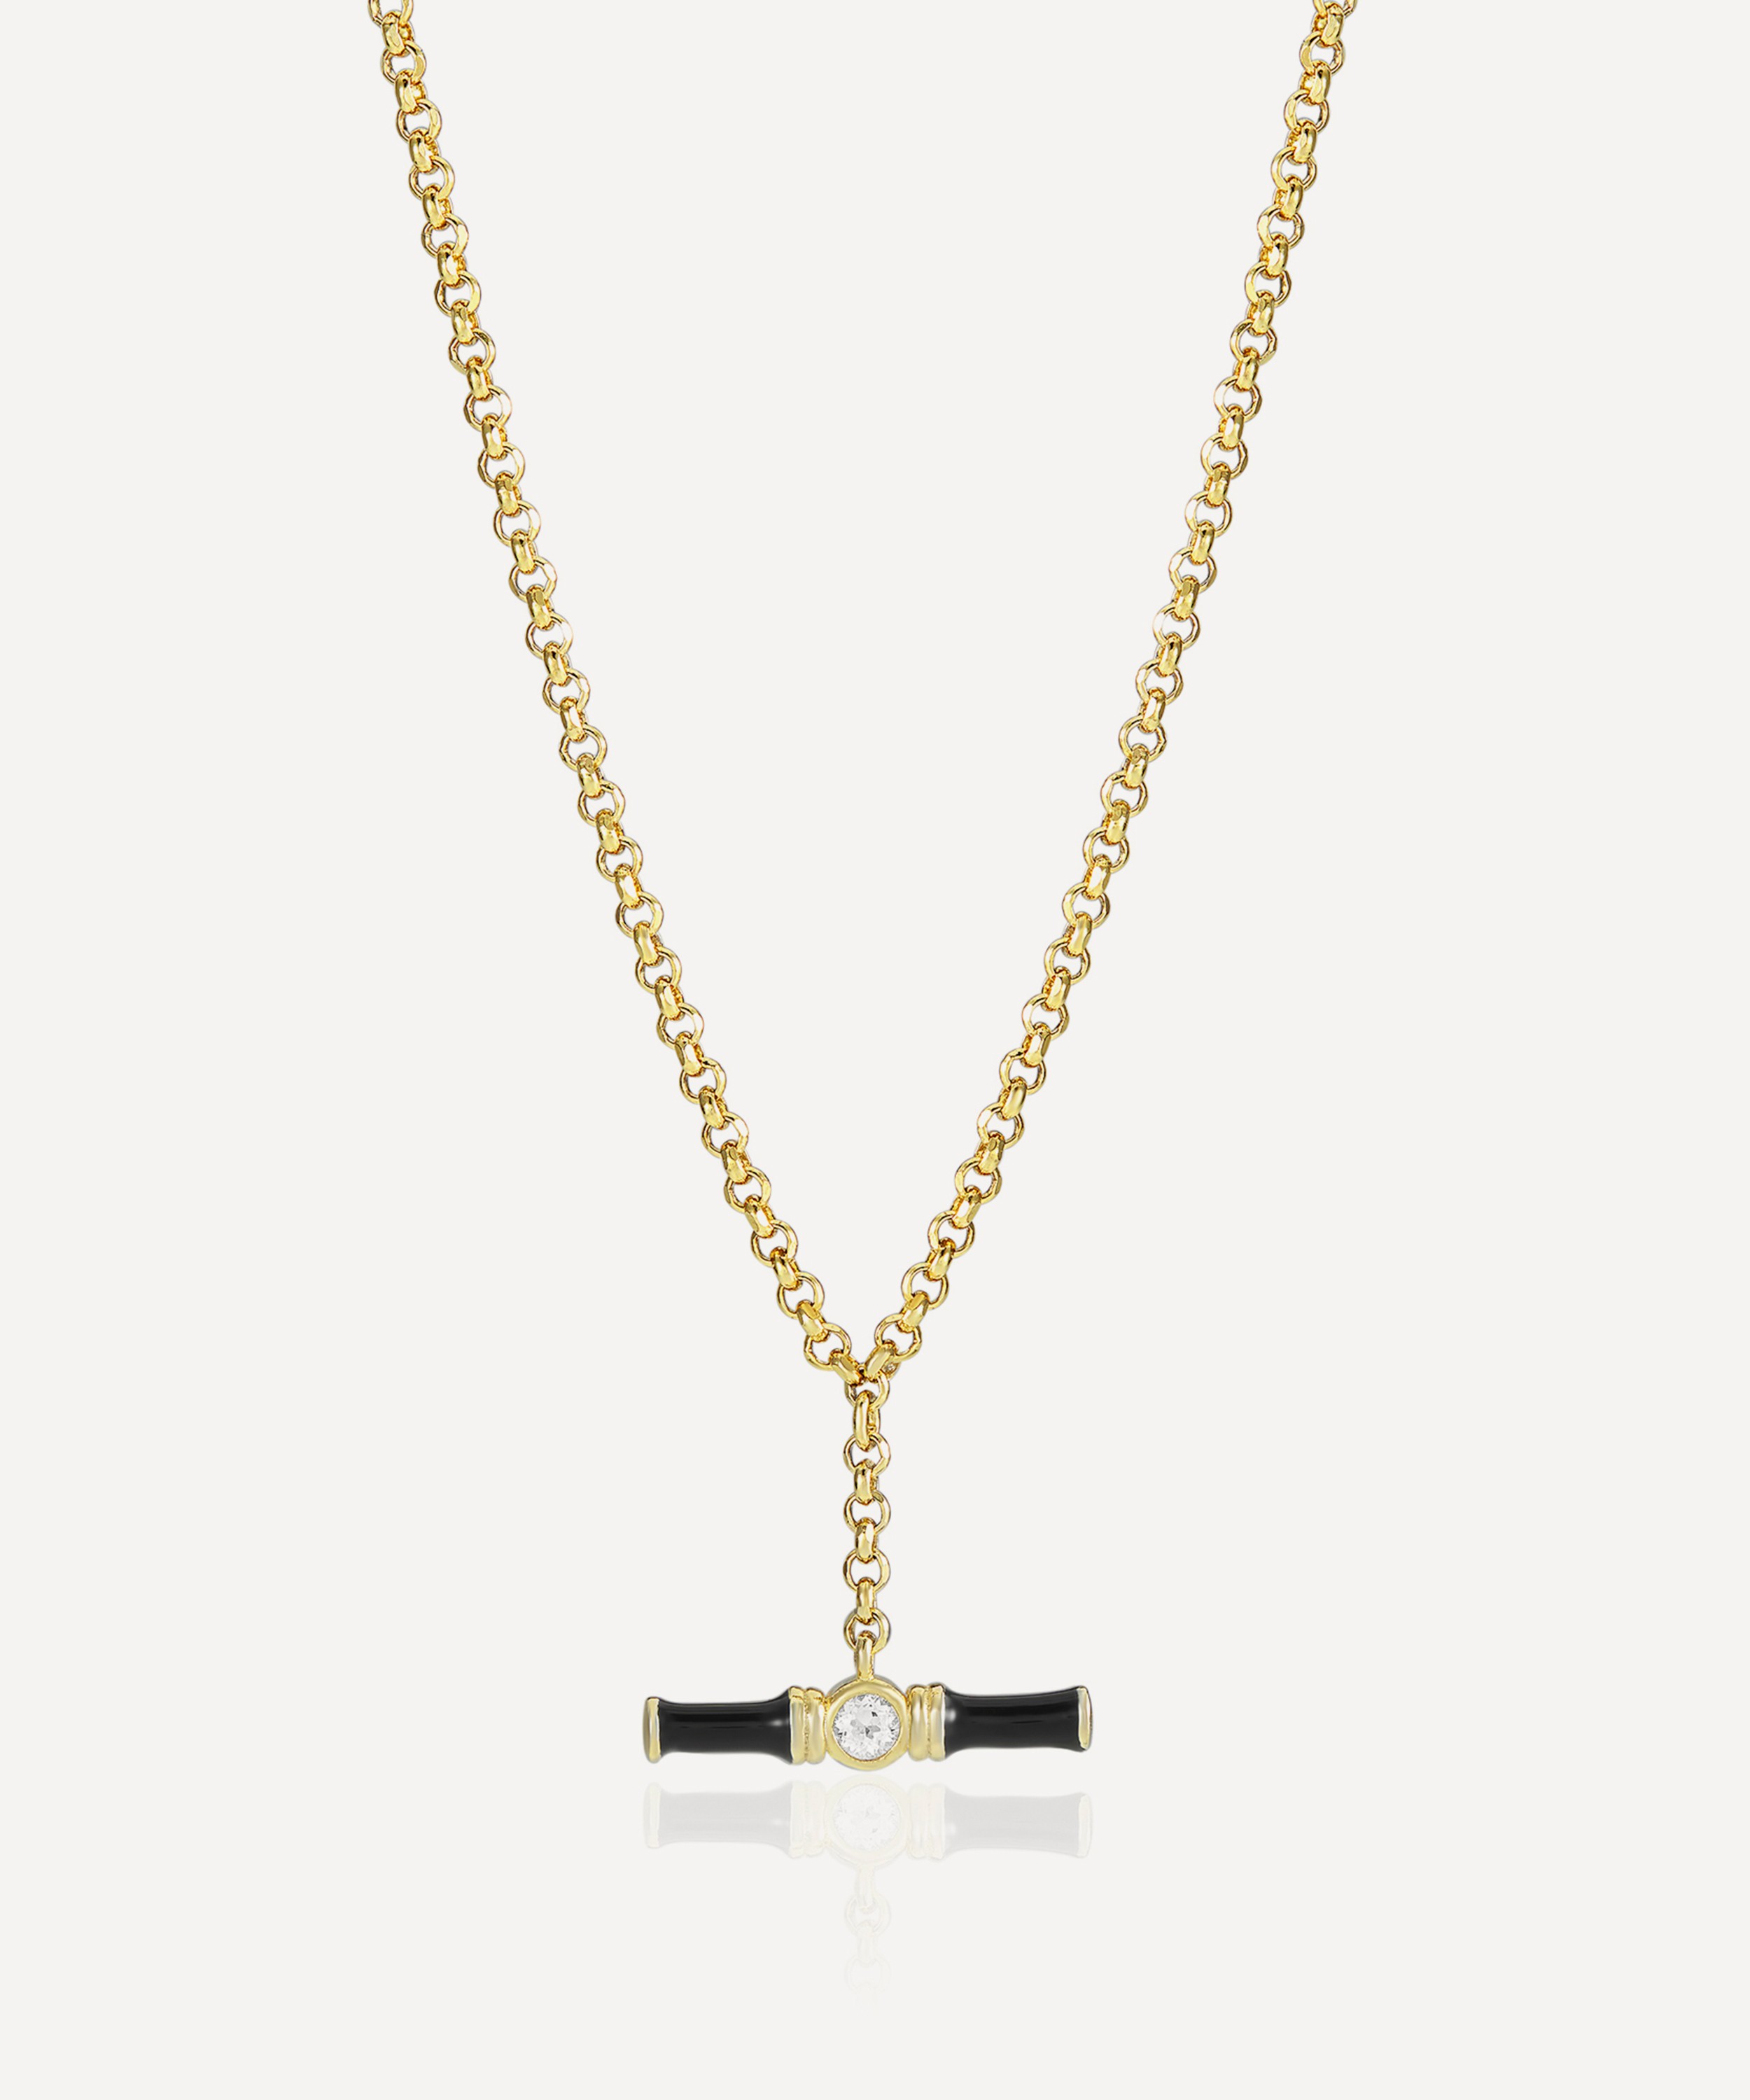 V by Laura Vann - 18ct Gold-Plated Vermeil Silver Dyllan Black Enamel T-Bar Pendant Necklace